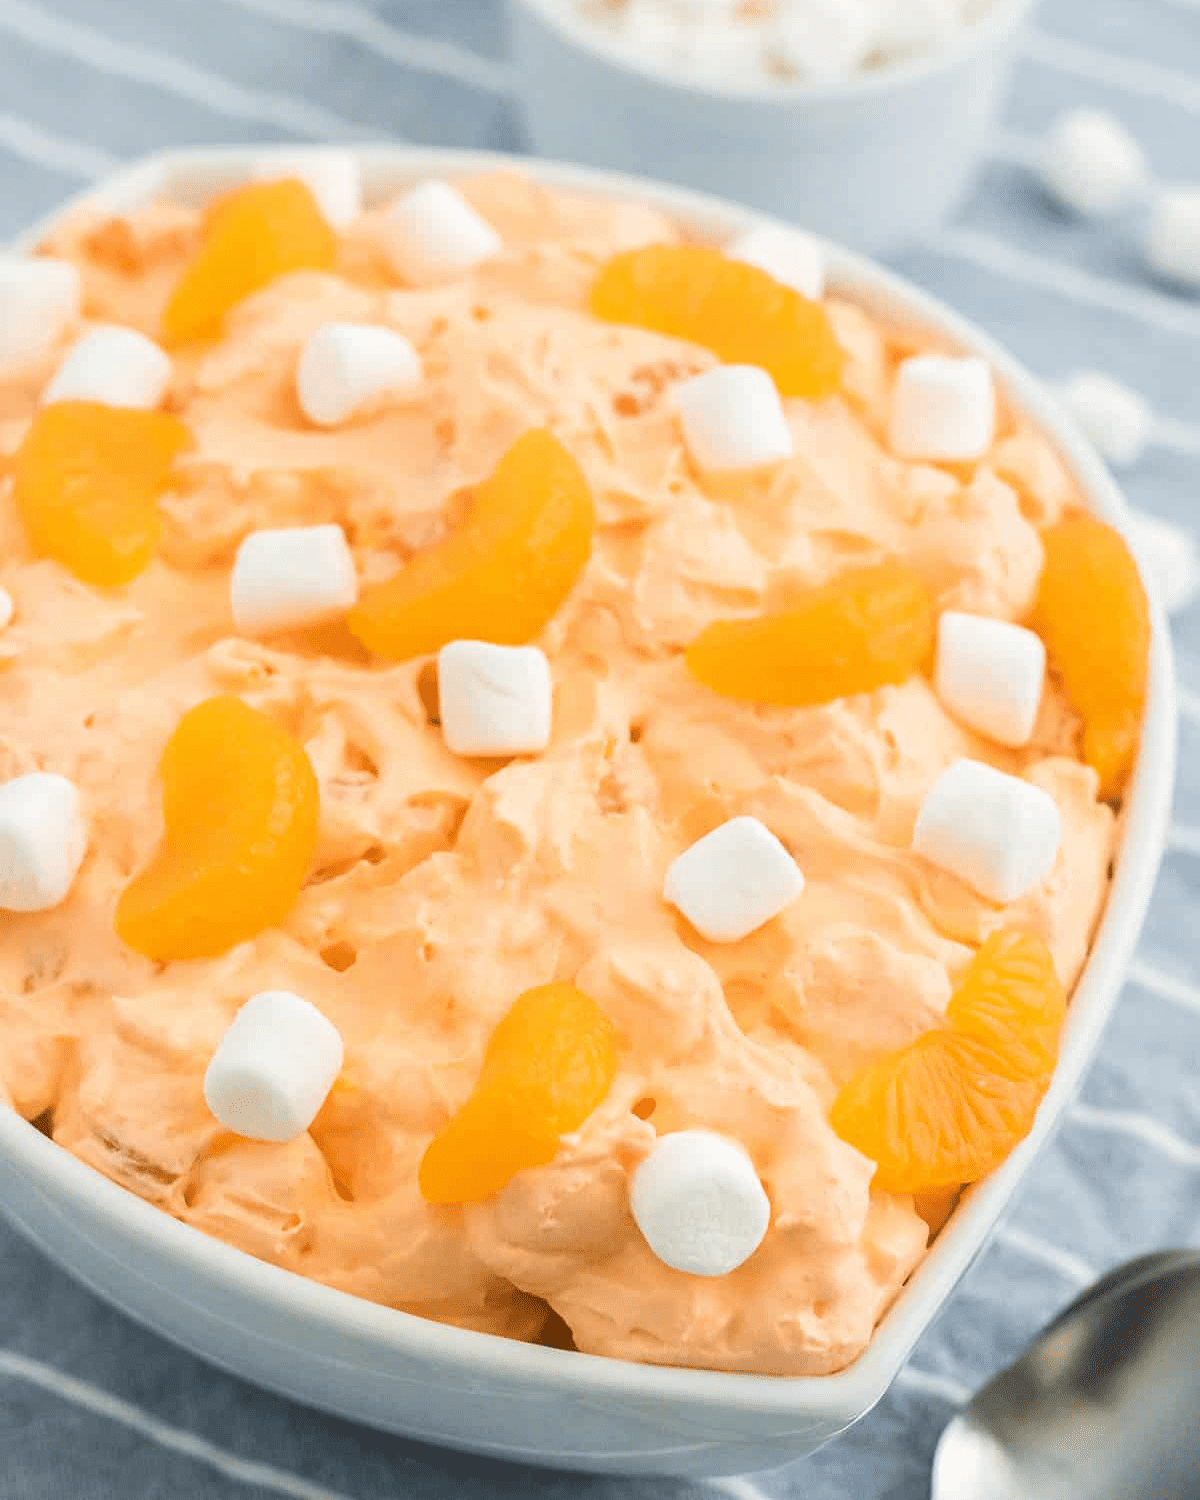 Orange fluff salad with mandarin oranges and mini marshmallows